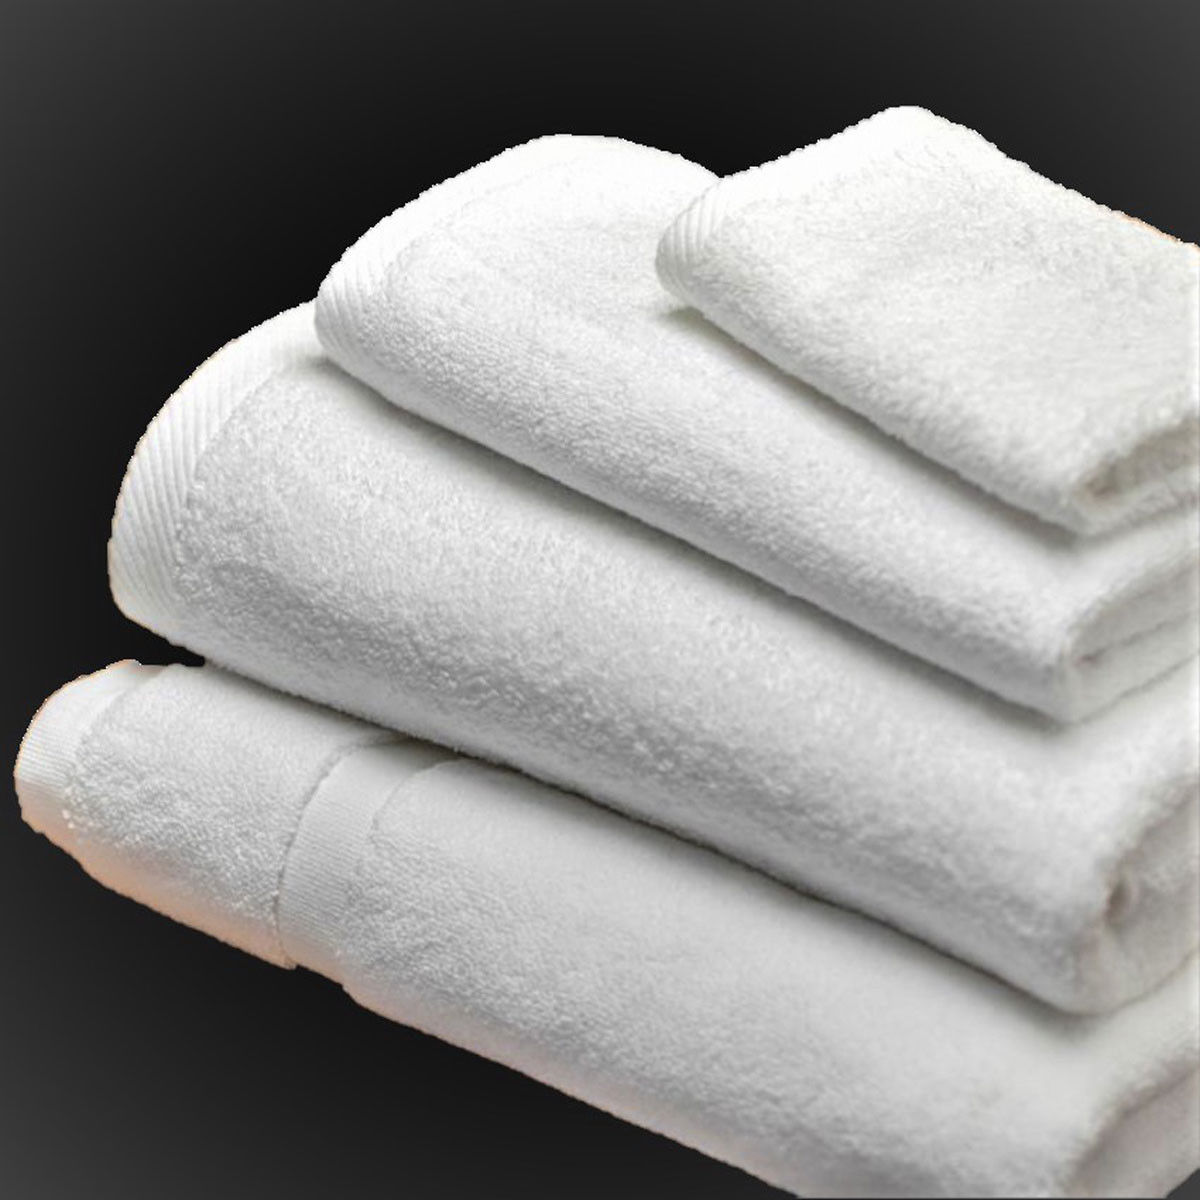 Where can I buy bulk bath towels wholesale?